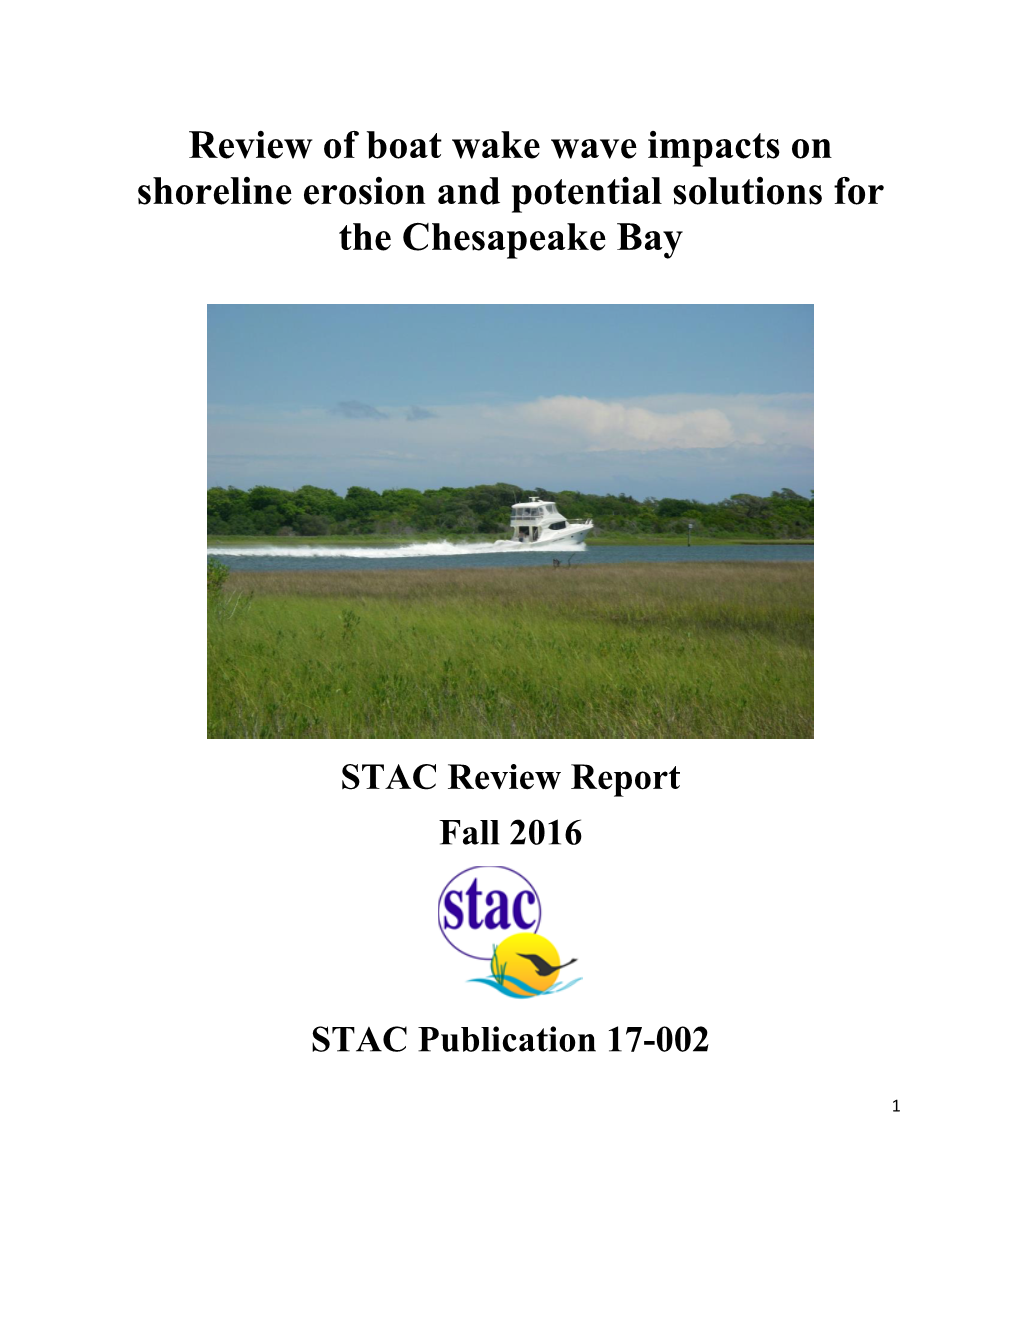 Chesapeake Bay STAC Boat Wake Study